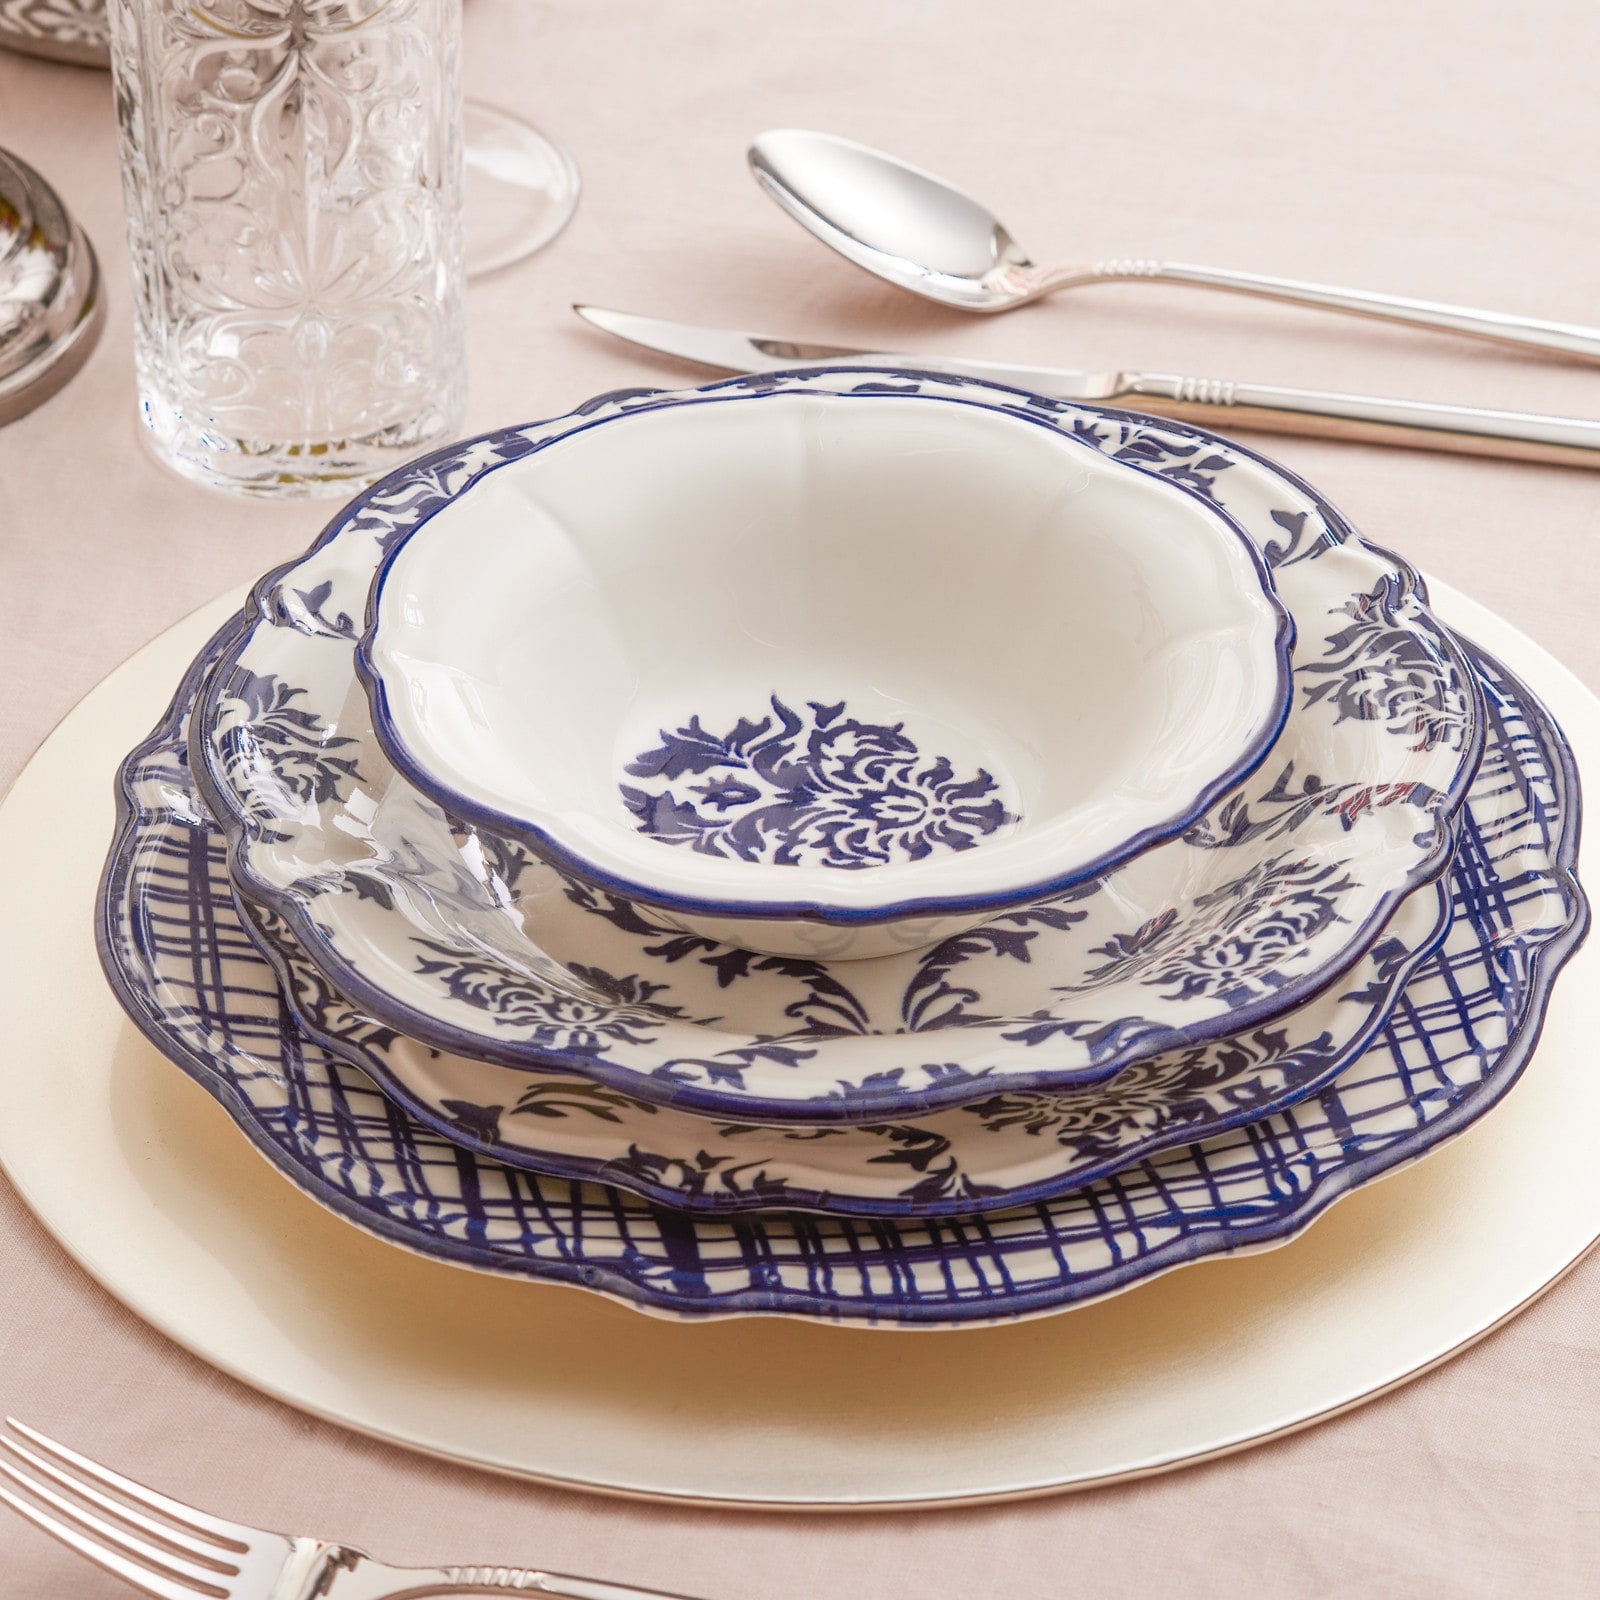 vancasso Takaki Porcelain Dinnerware Set Plates Bowls Mugs